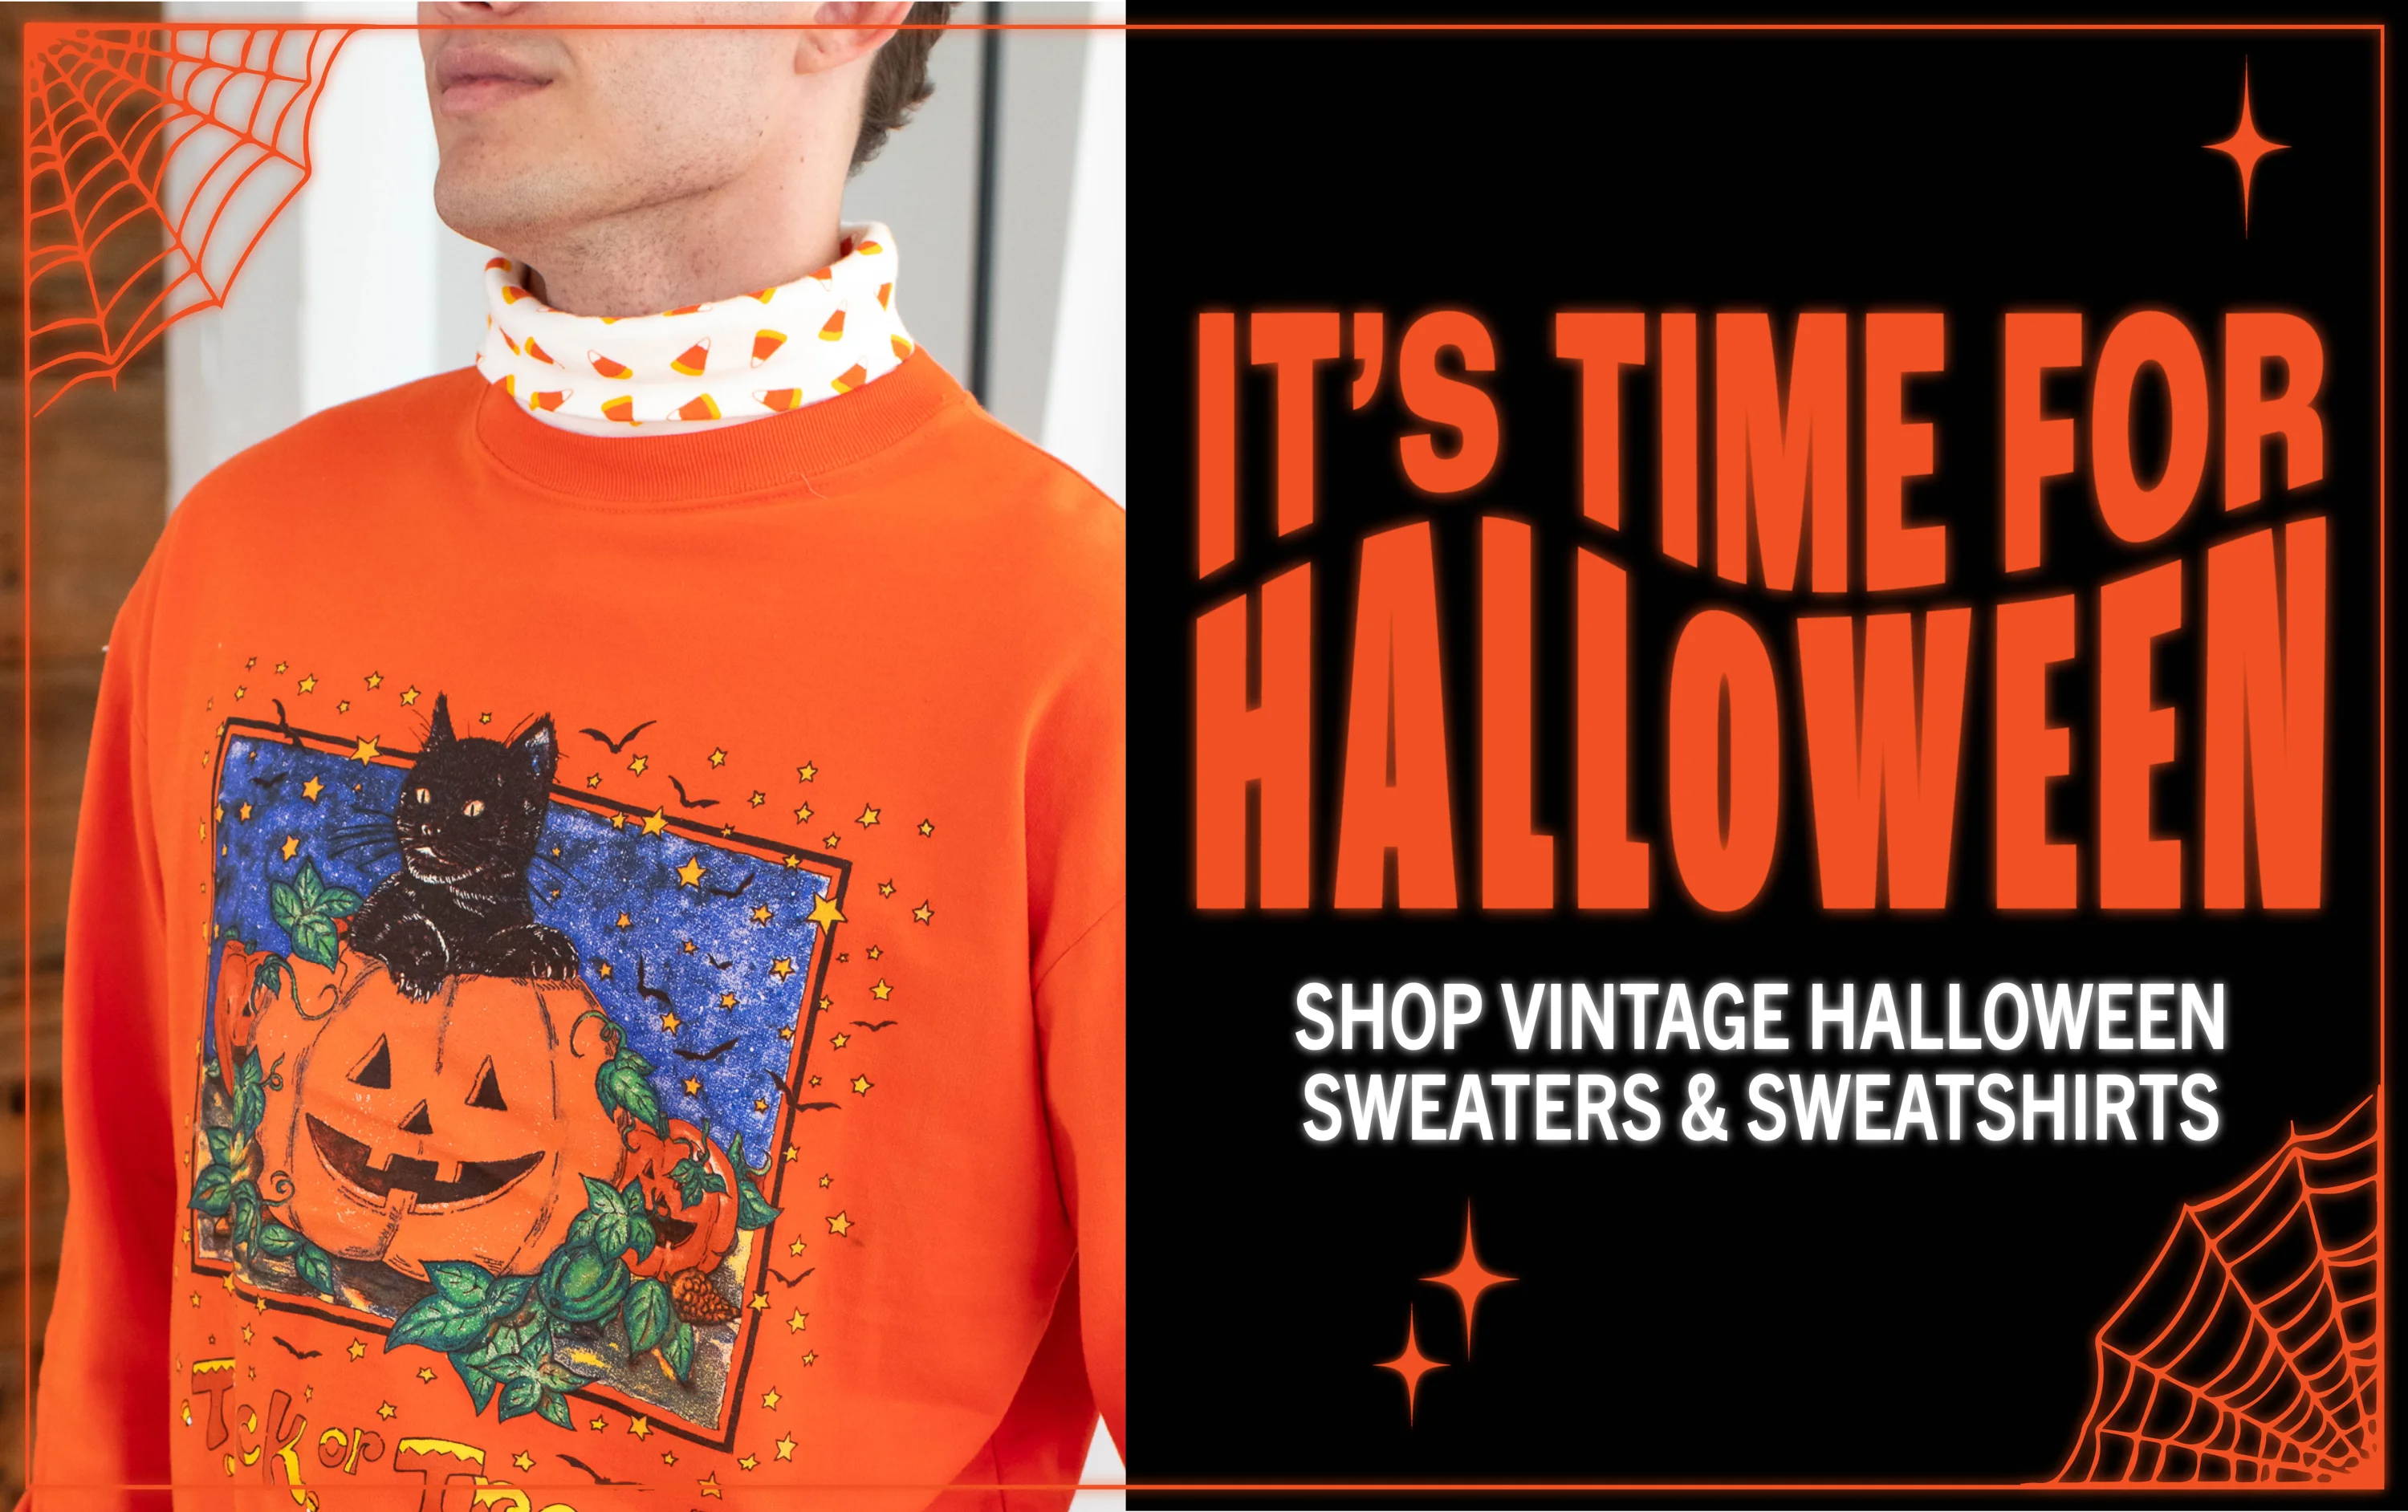 It's Time for Halloween. Shop vintage halloween sweaters & sweatshirts